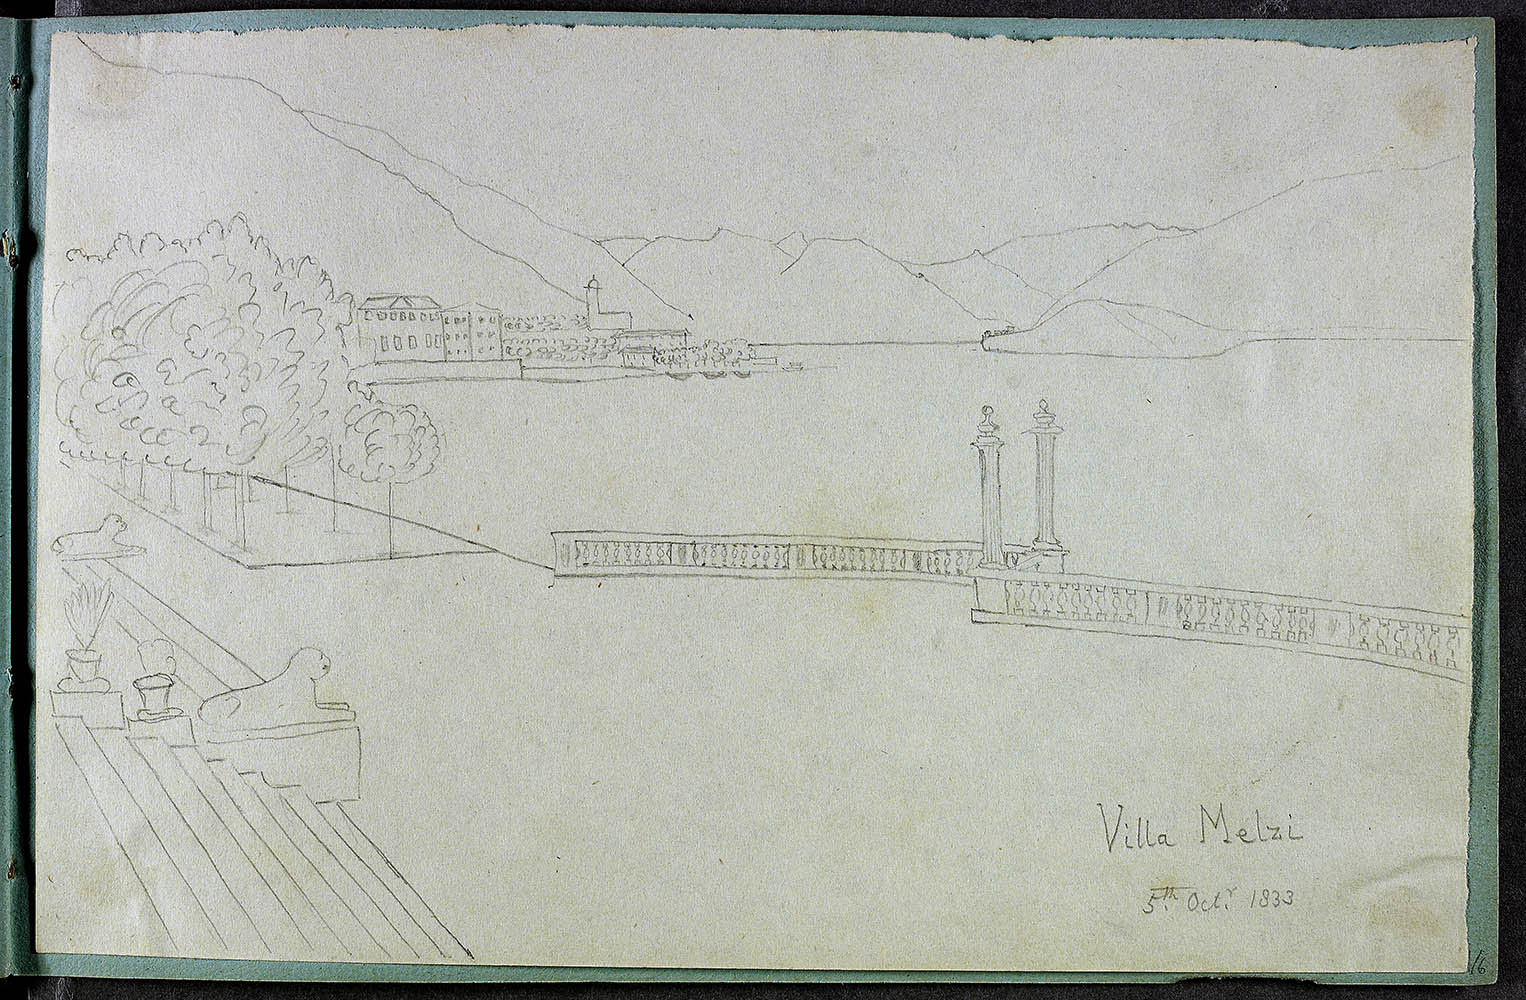 HenryFoxTalbot_boat landing for Villa Melzi 5 Otober 1833.jpg